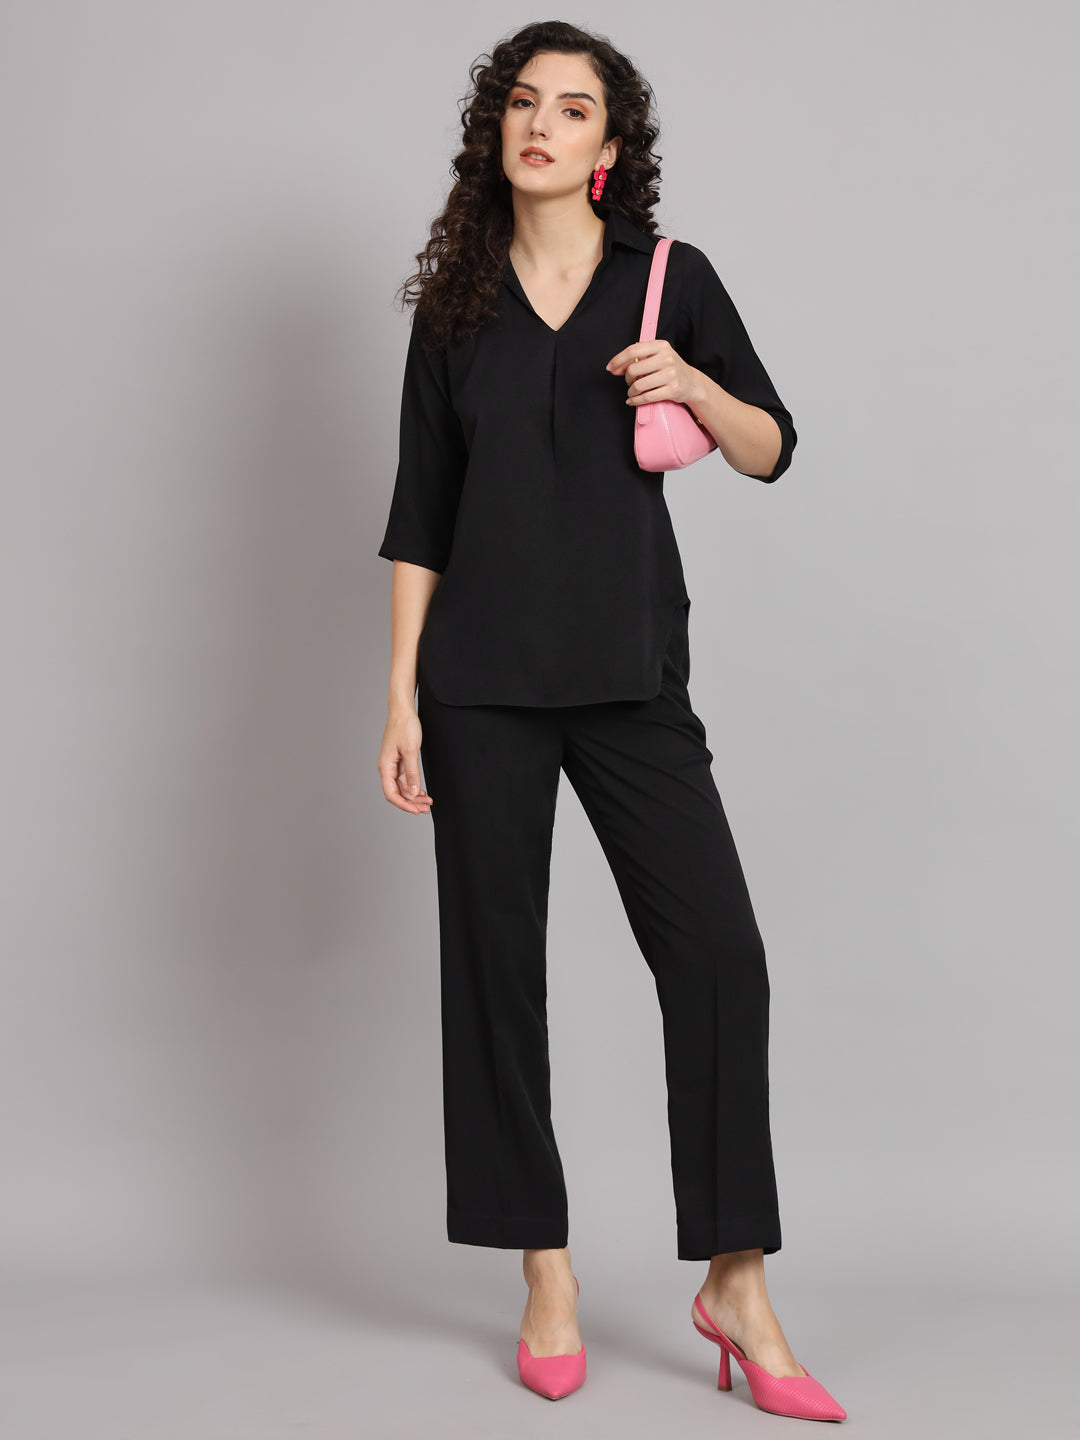 Buy Black Suit Sets for Women by LE BOURGEOIS Online | Ajio.com